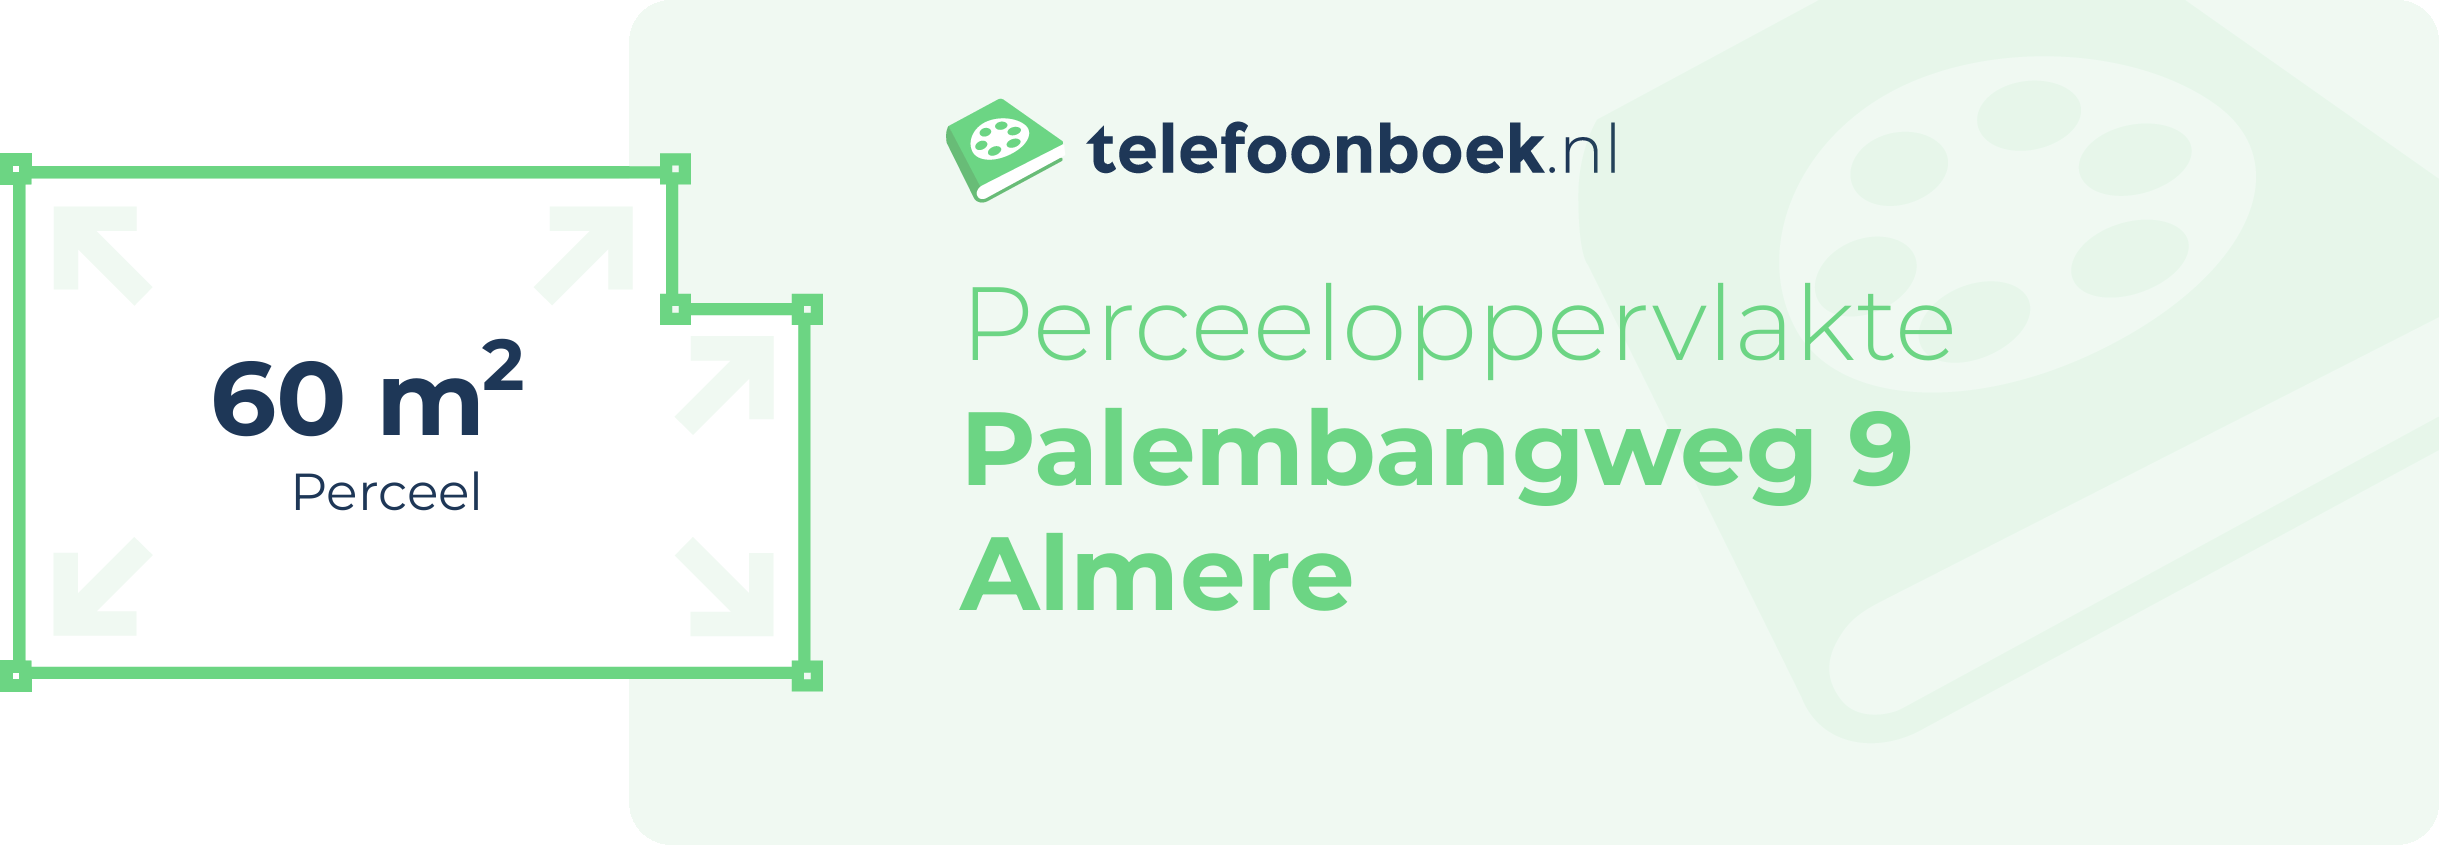 Perceeloppervlakte Palembangweg 9 Almere